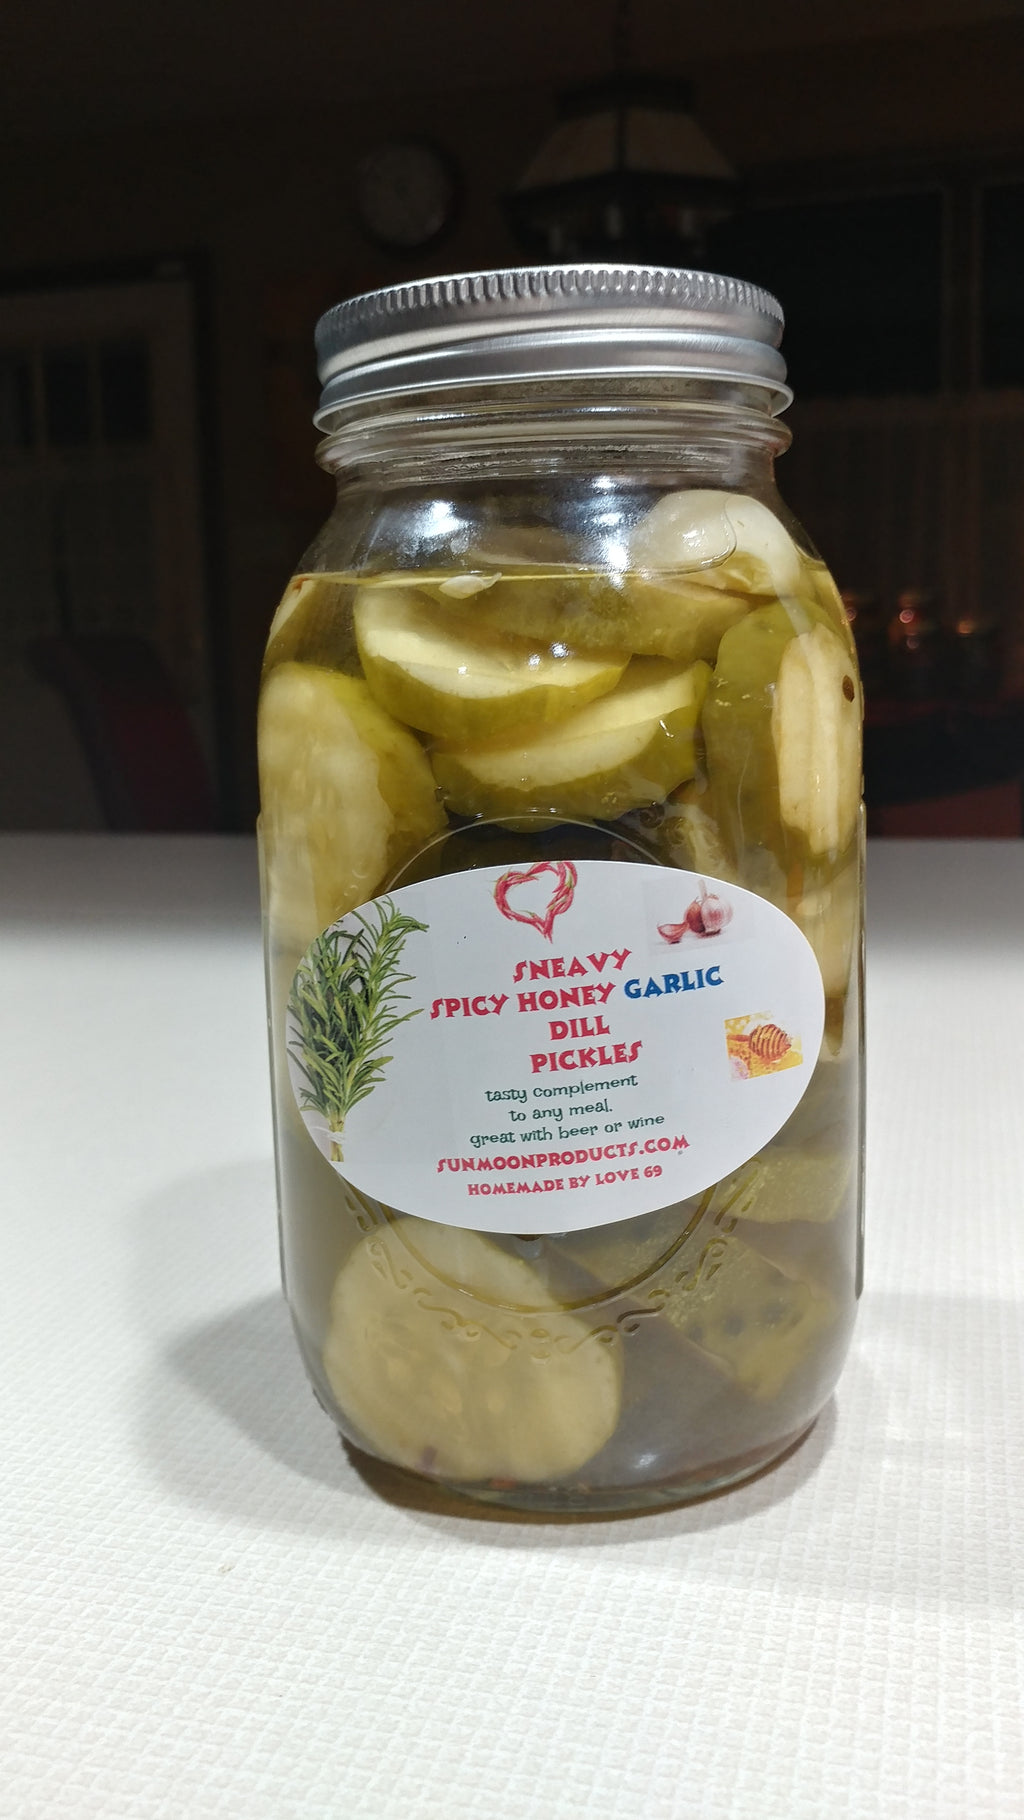 Sneavy Garlic Spicy Hot Honey Dill Pickles 1 Quart